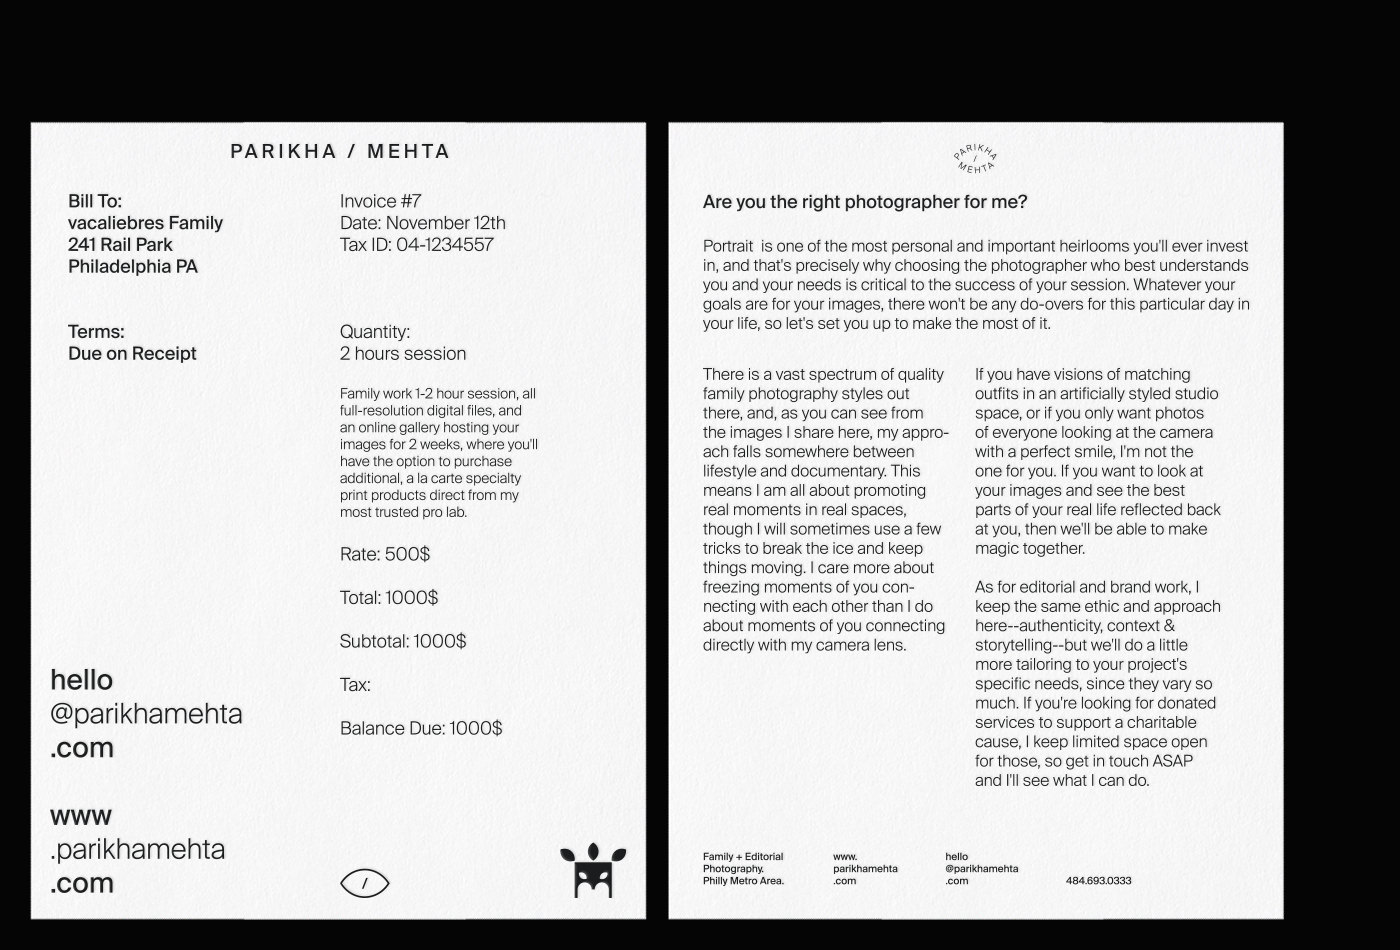 parikha-mehta-parikhamehta-photography-philadelphia-philly-family-editorial-pm-branding-brand-system-letterhead-invoice-vacaliebres